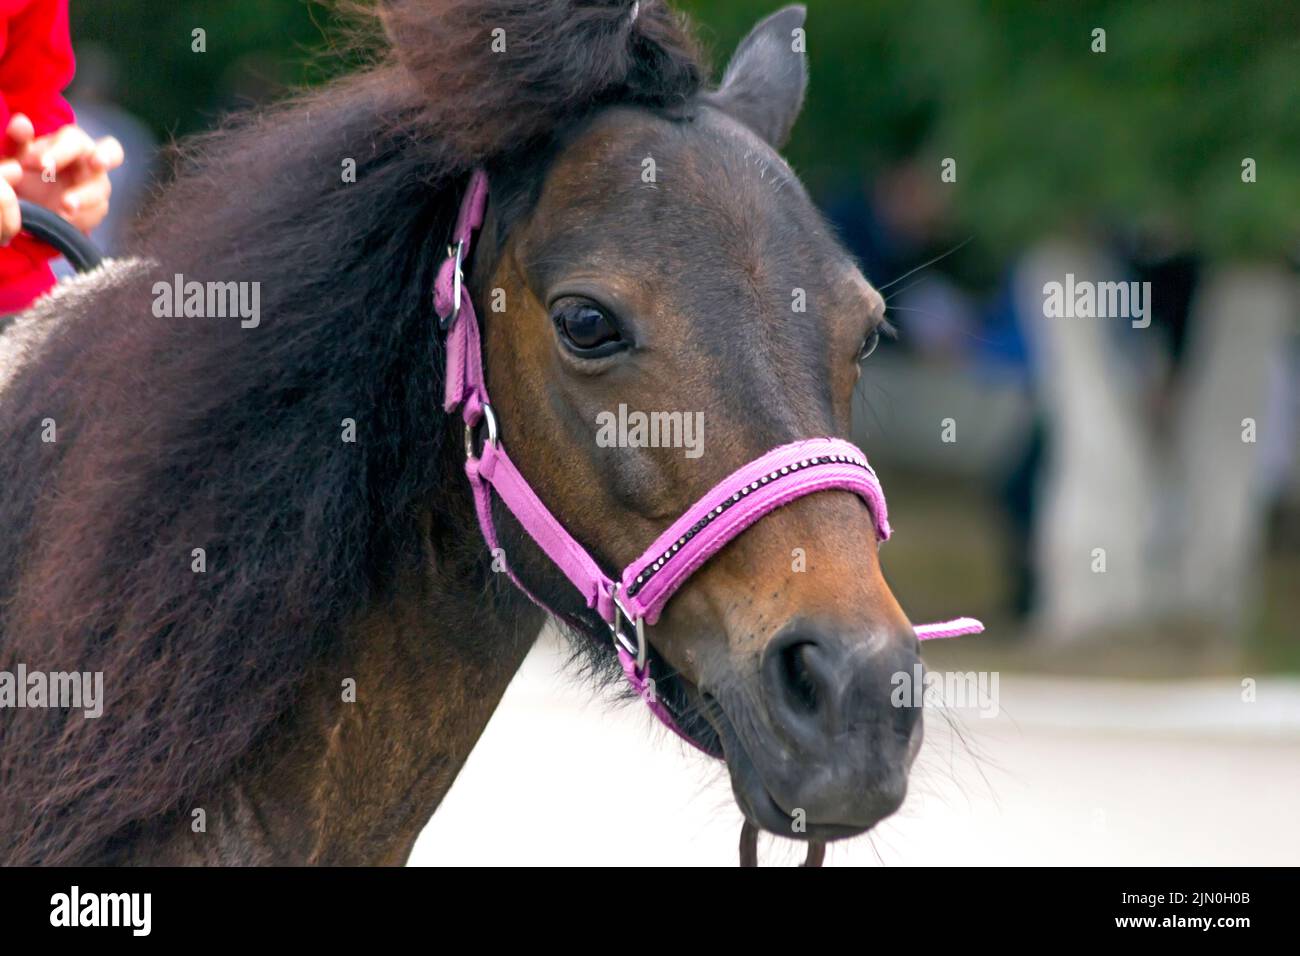 Very calm pony rides children Stock Photo